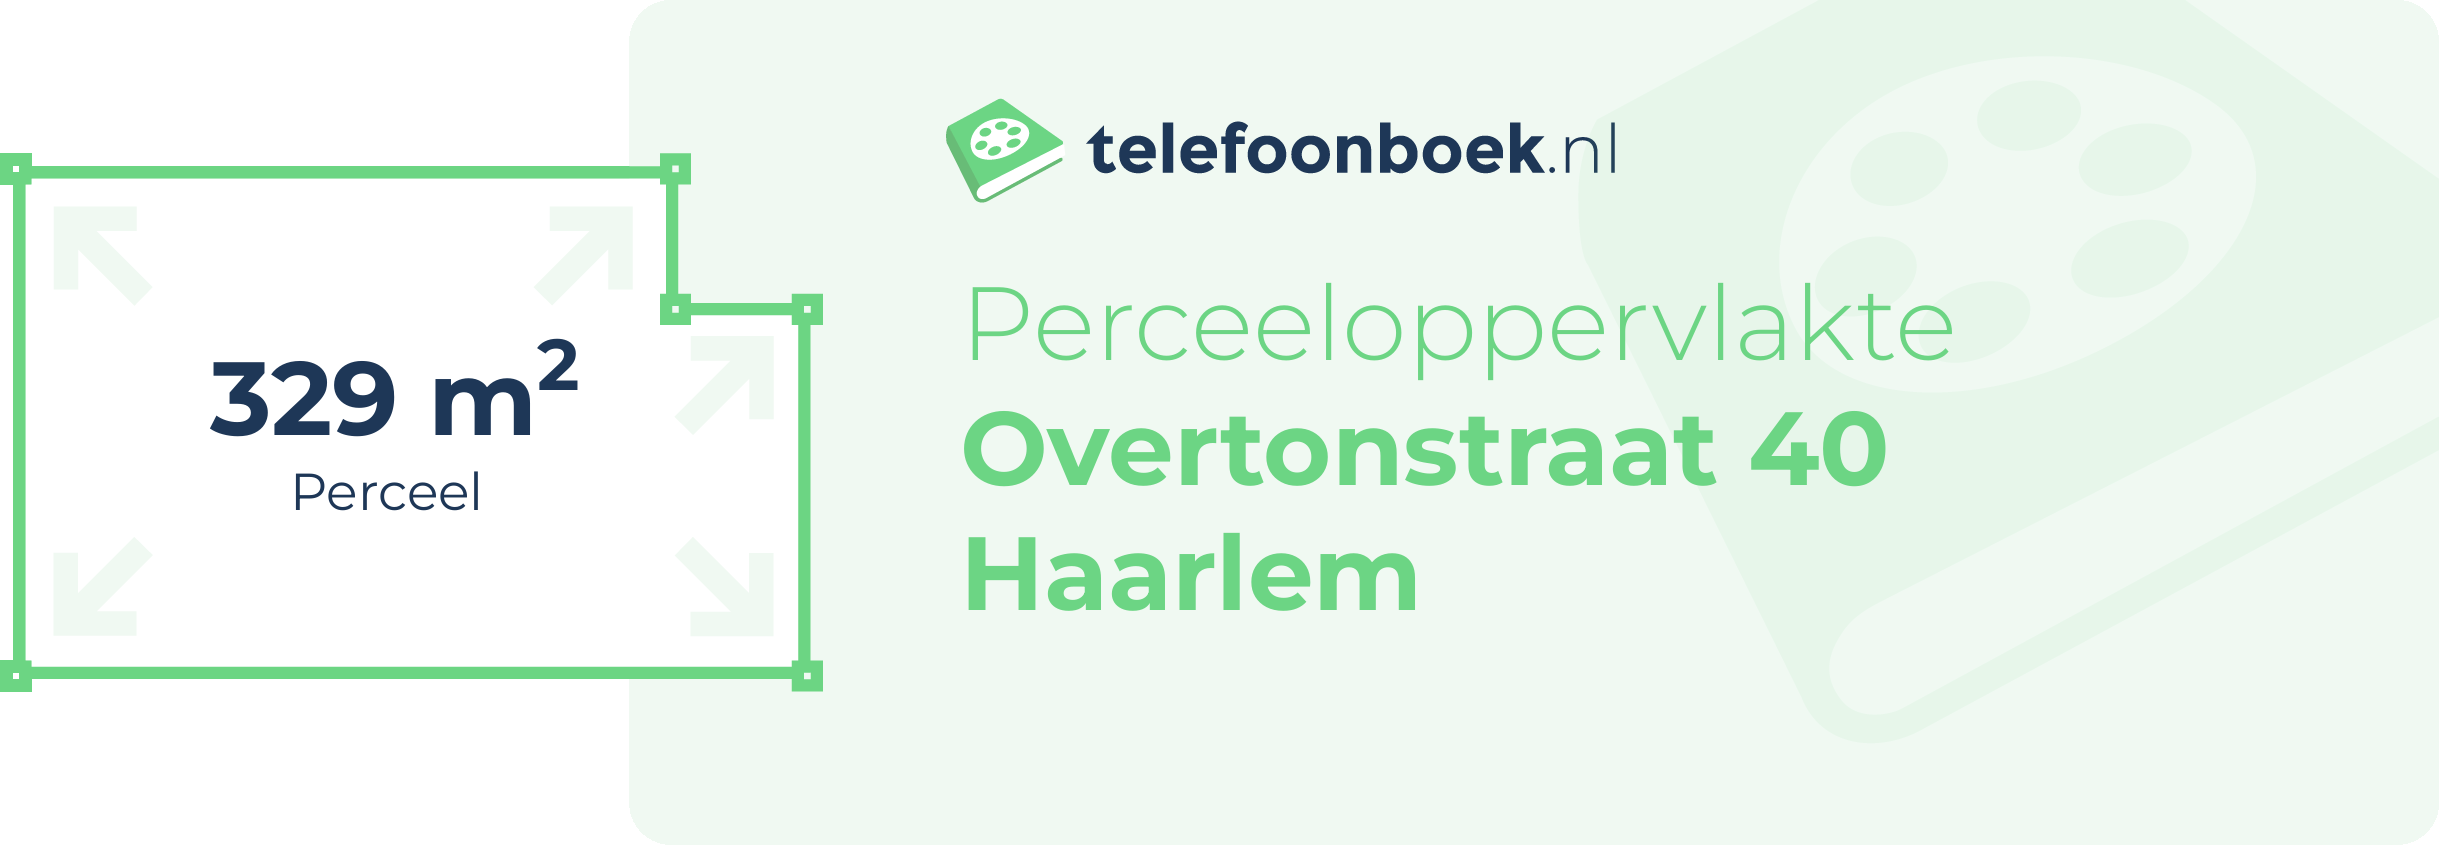 Perceeloppervlakte Overtonstraat 40 Haarlem